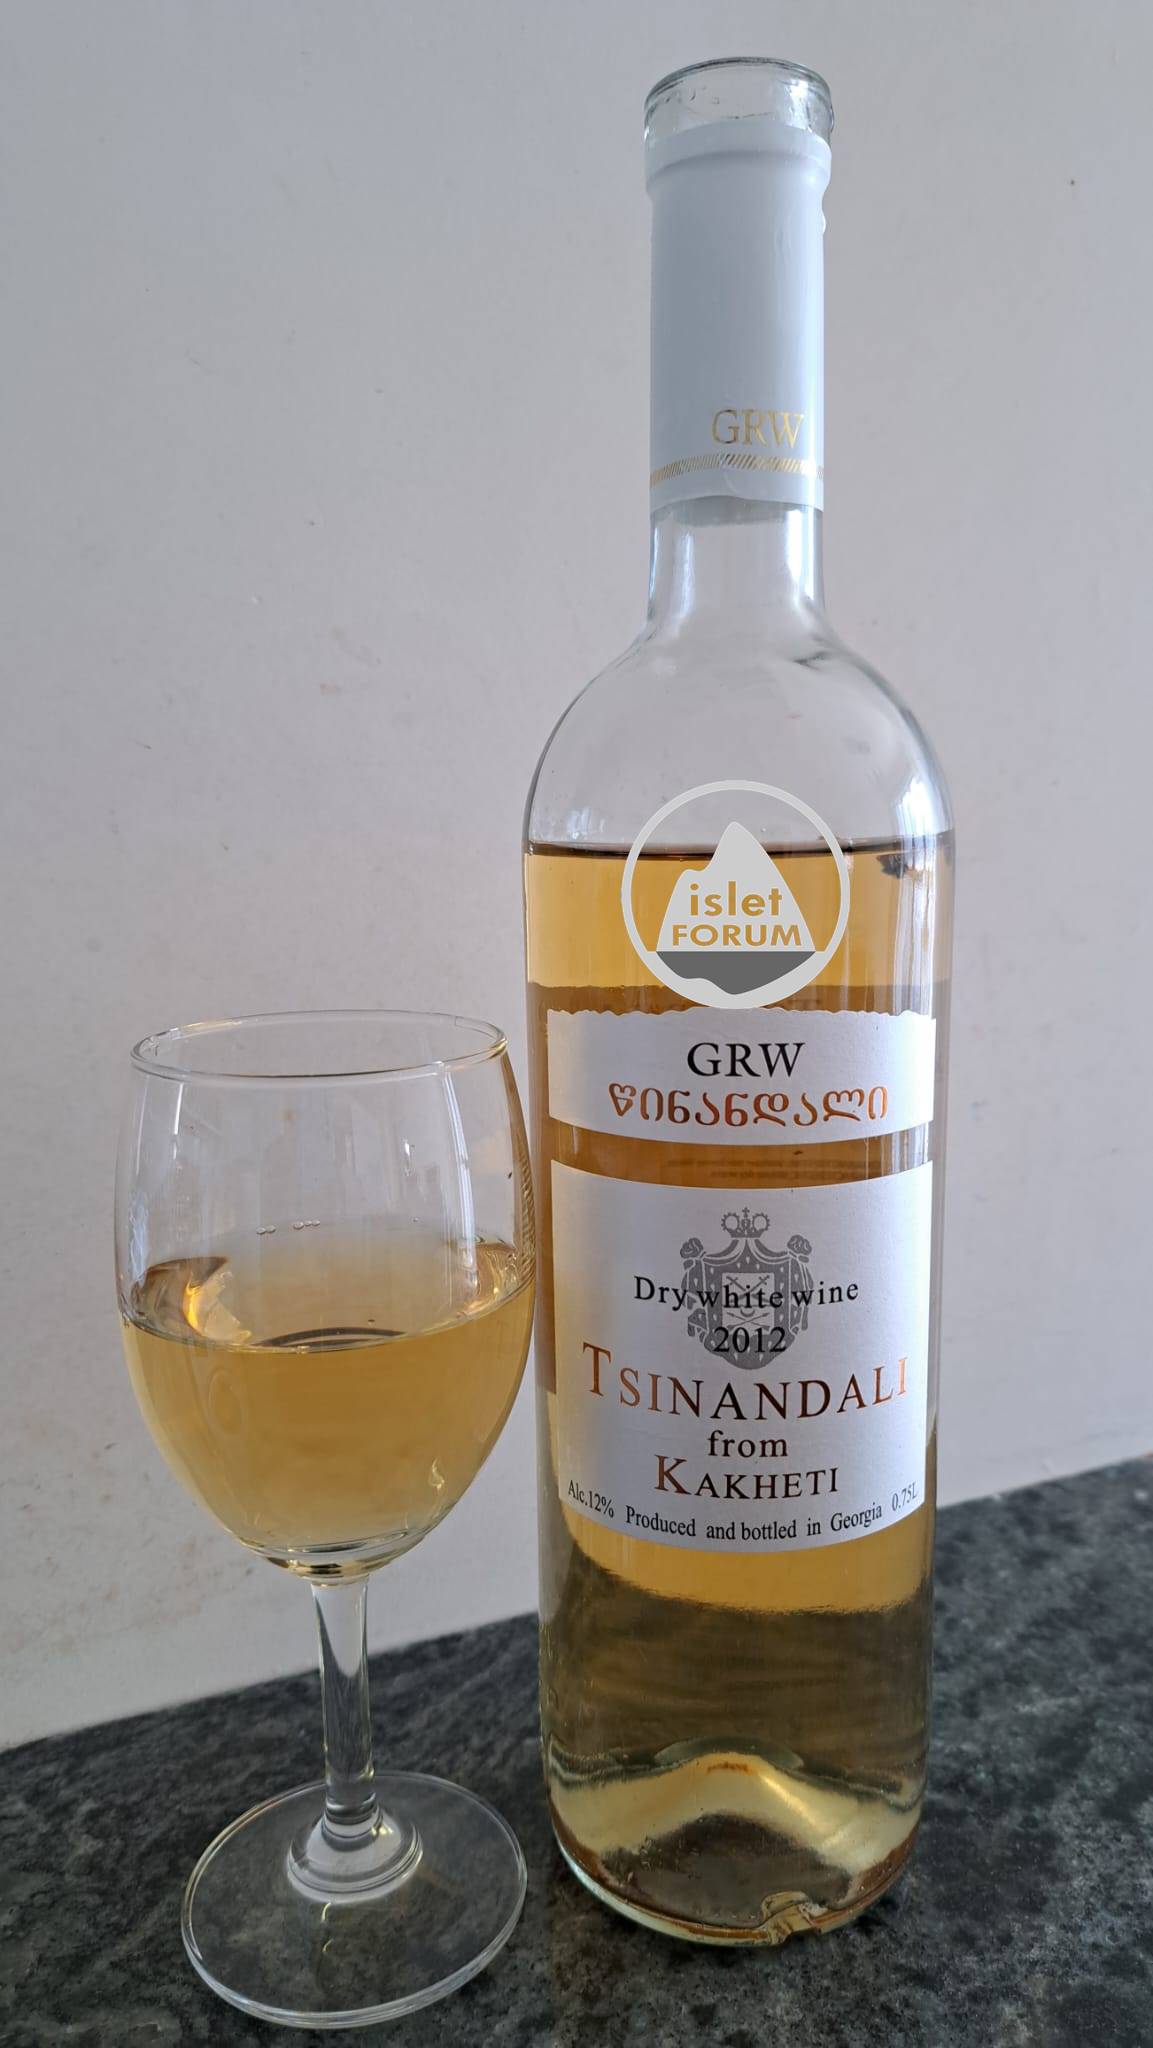 GRW Dry white wine 2012 Tsinandali from Kakheti, 格魯吉亞白葡萄酒，isletforum，.jpeg